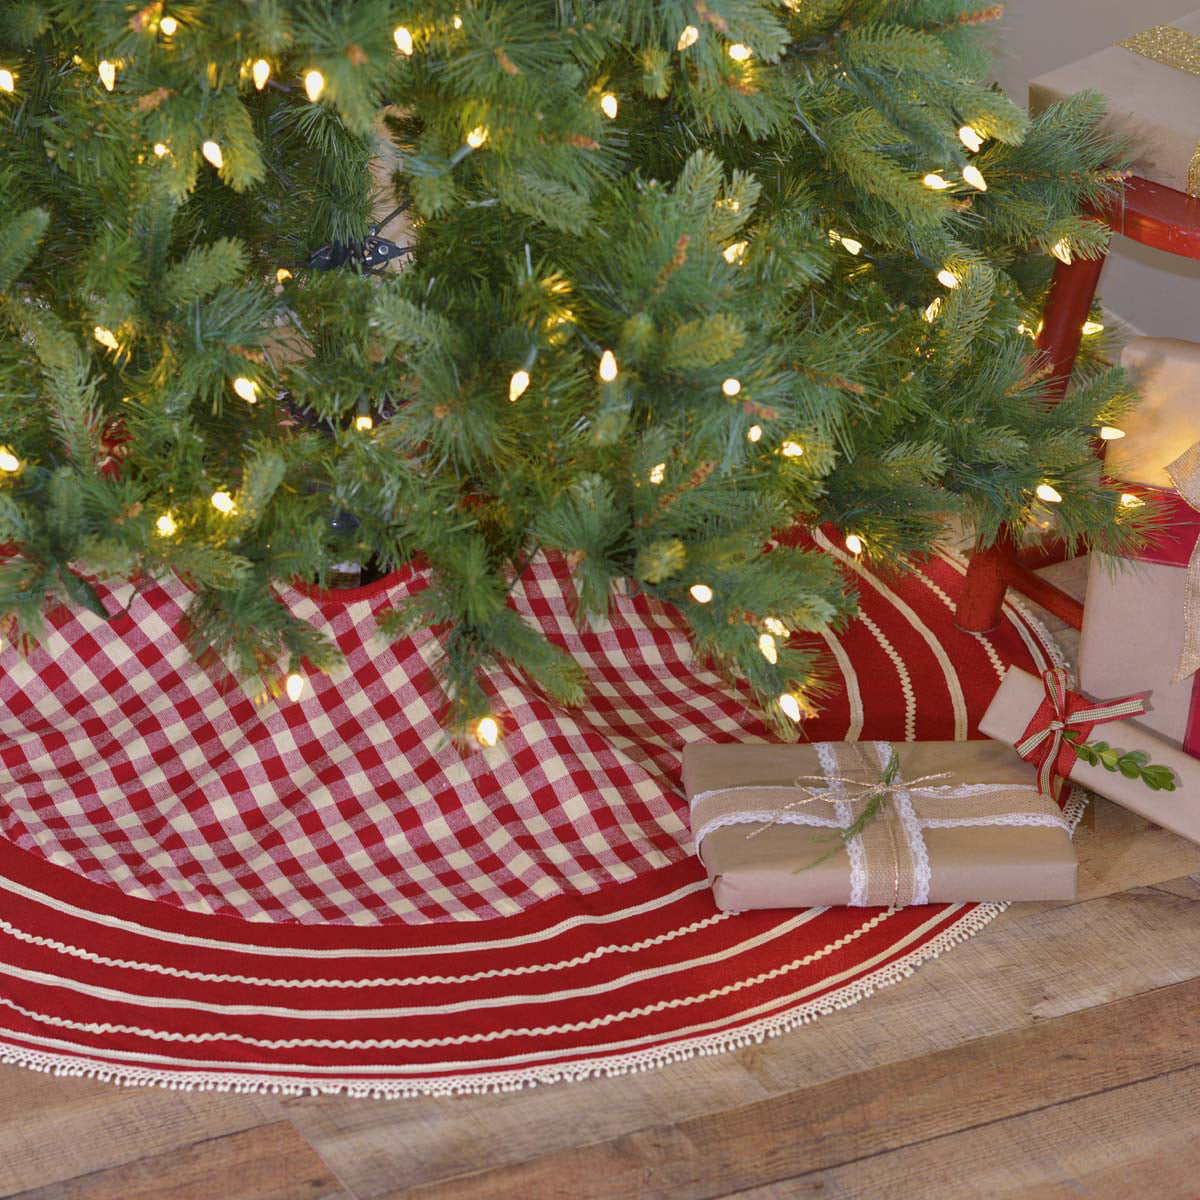 BURLAP NATURAL RUFFLED CHRISTMAS TREE SKIRT 48" By VHC BRANDS 